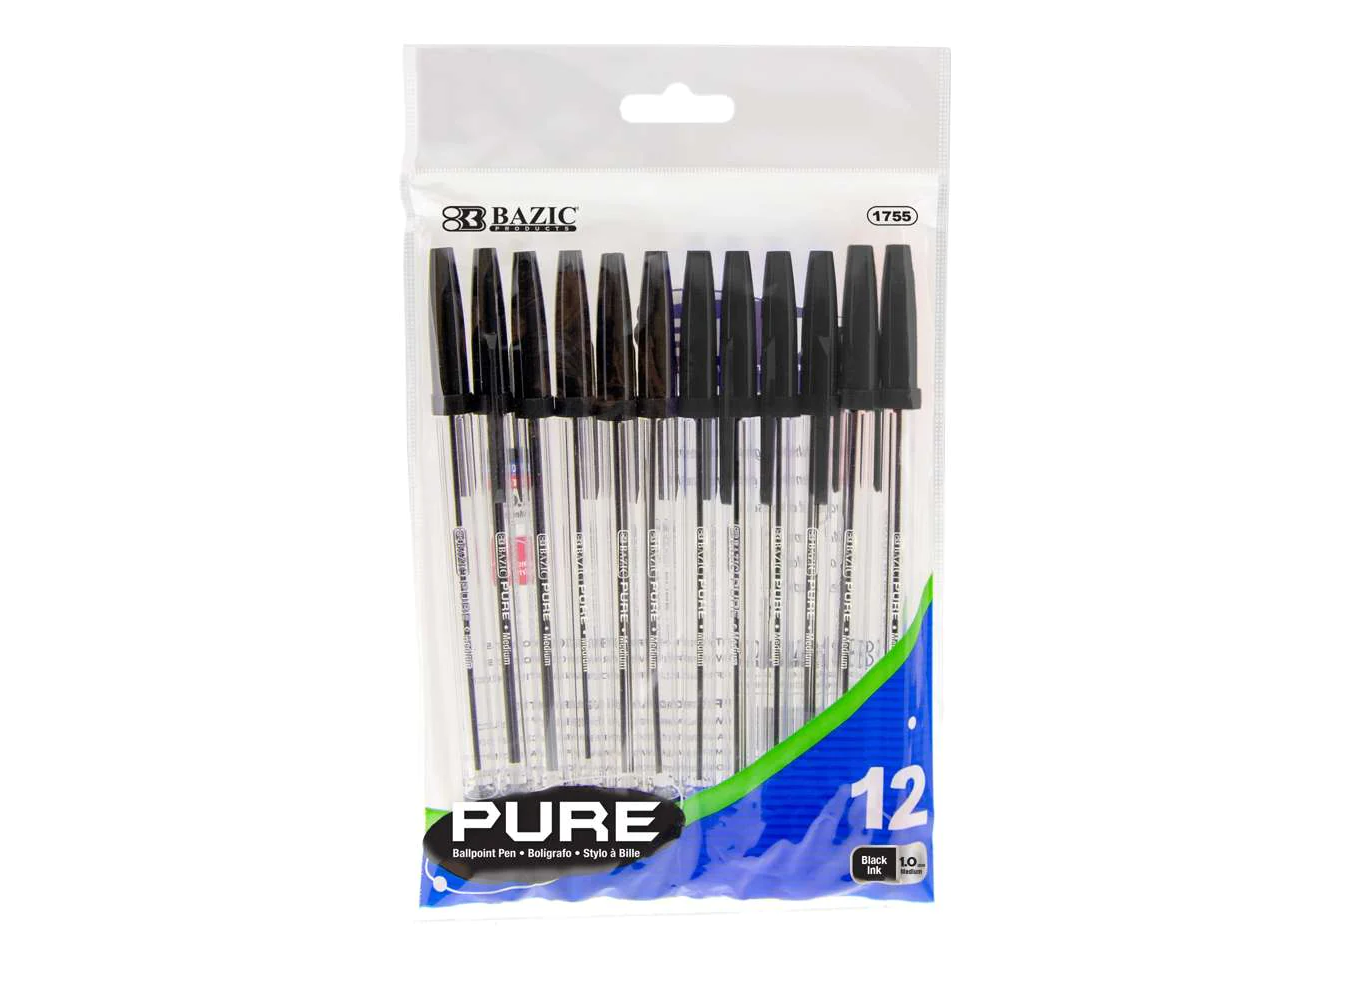 Bazic Pure Stick Pen Black (Each)